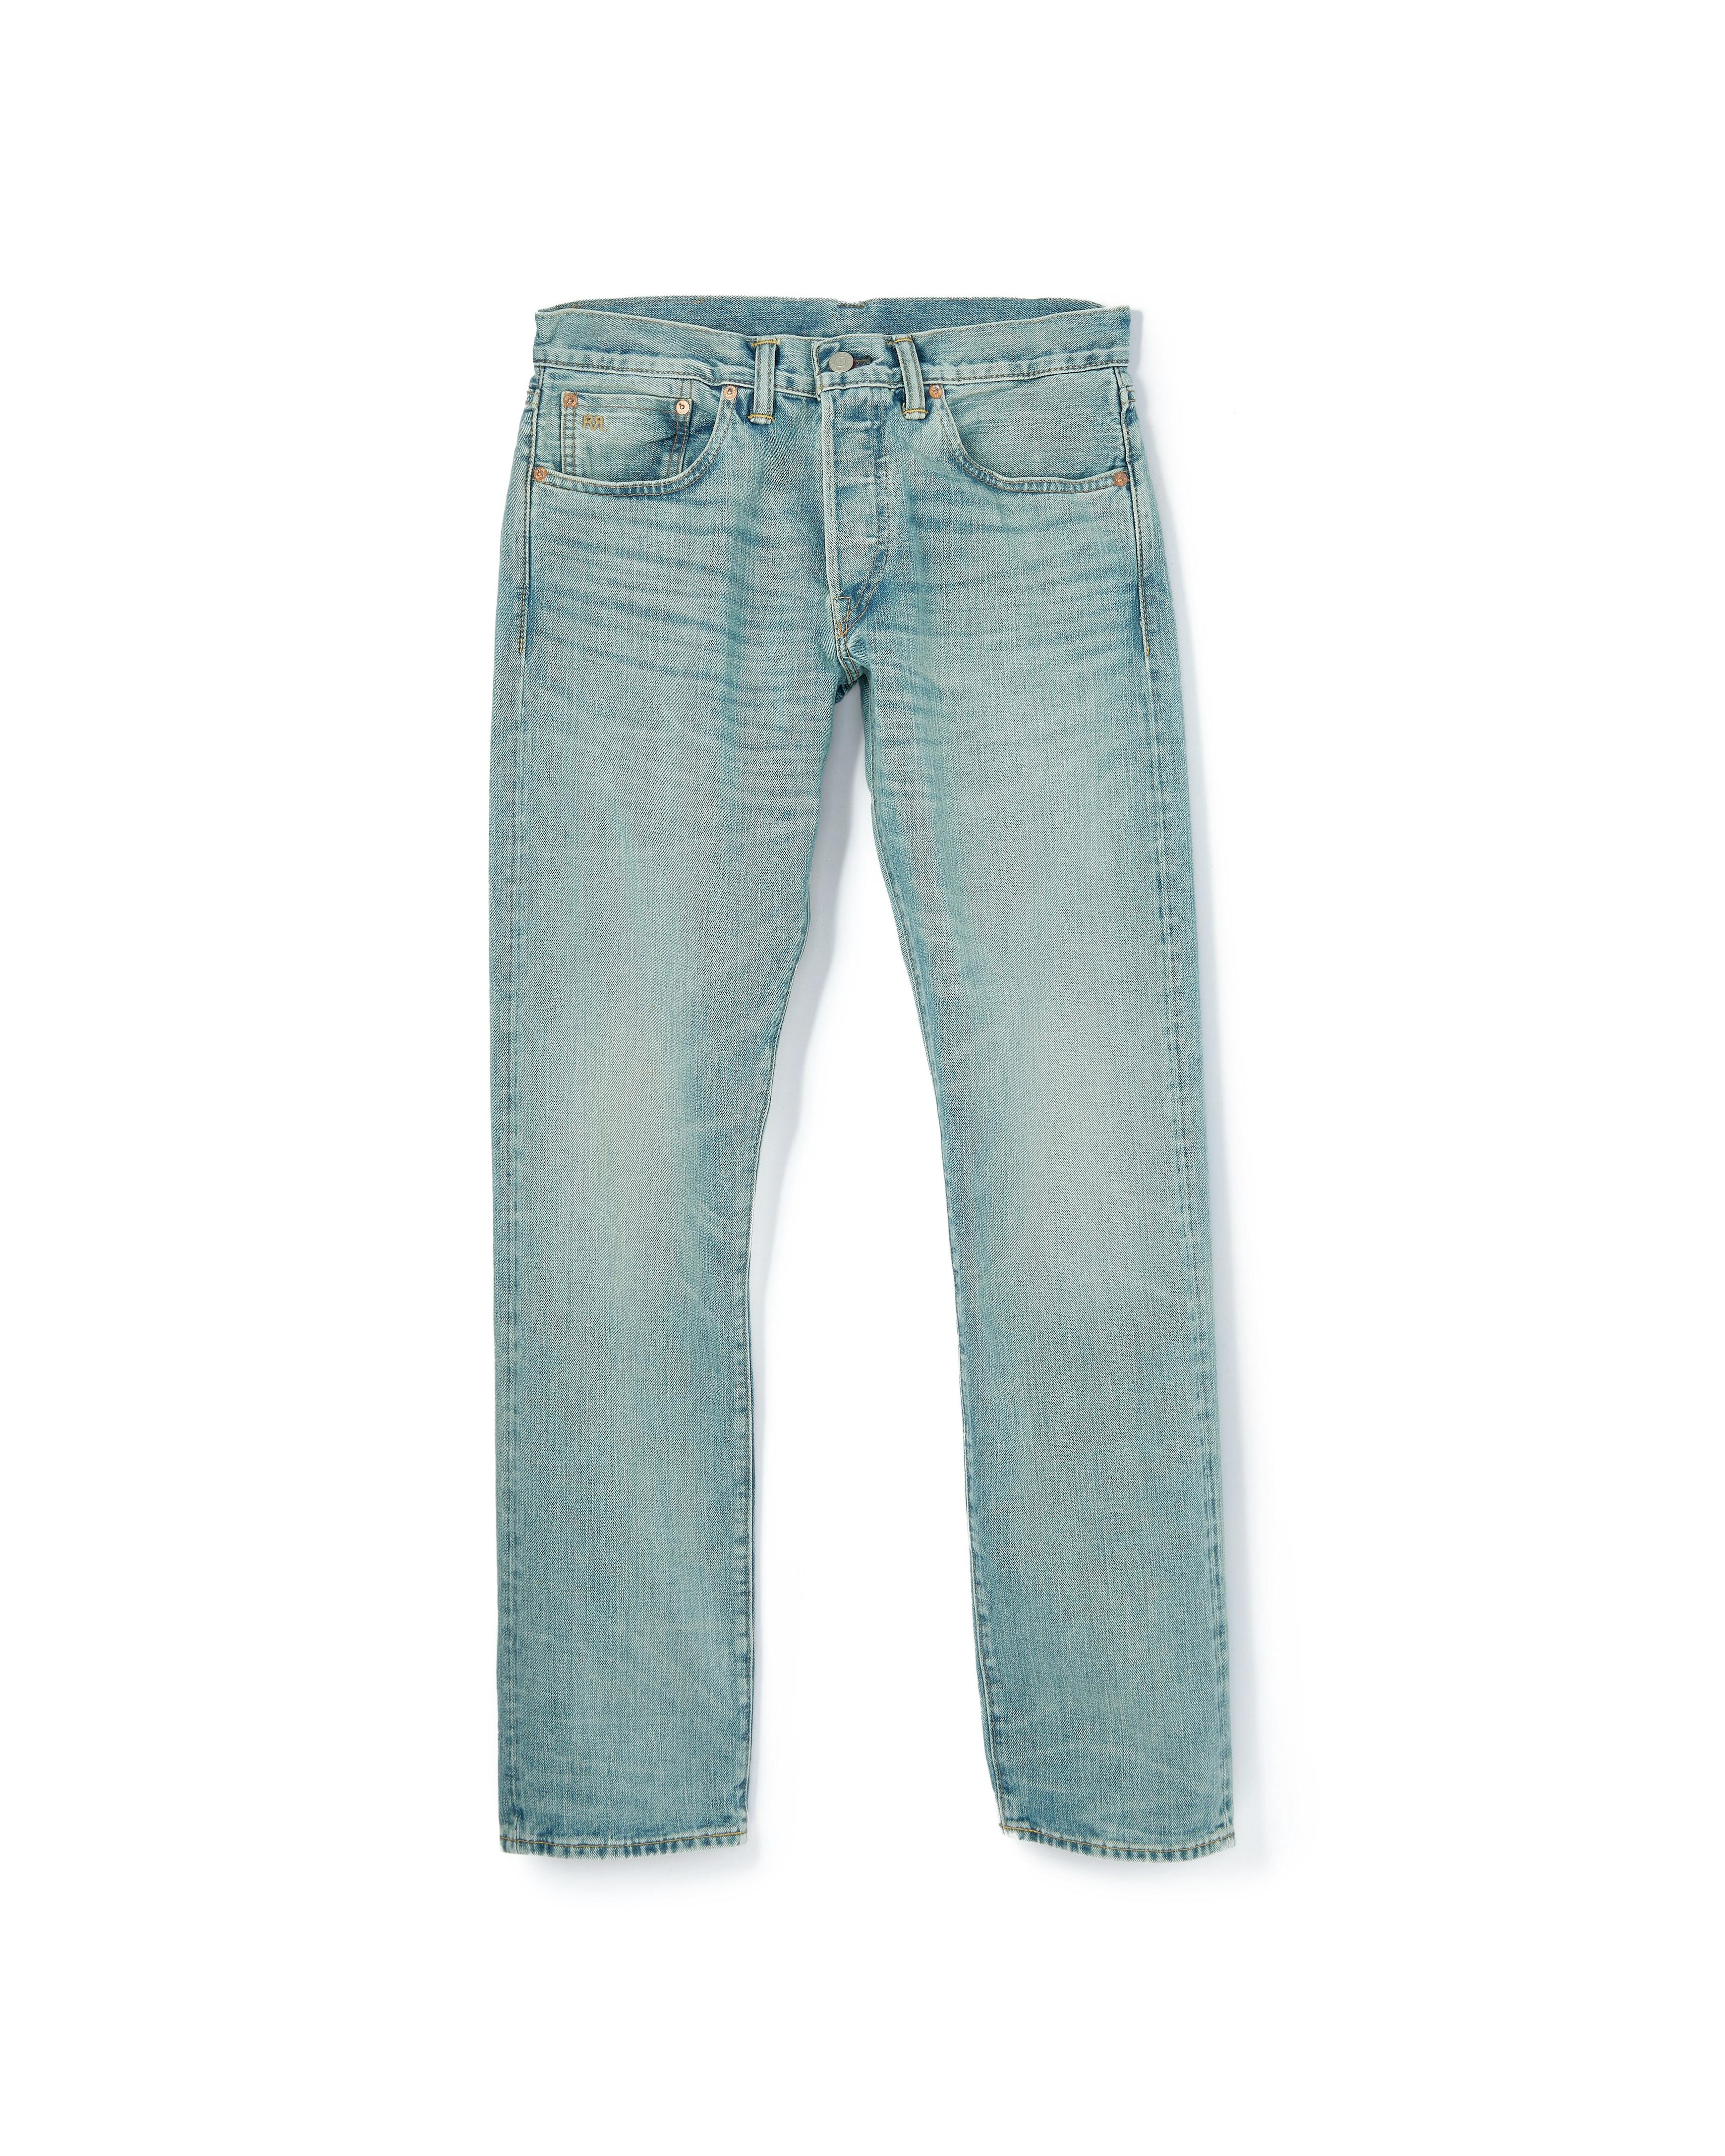 RRL Slim Fit Selvedge Denim Jeans - Otisfield Wash | Jeans | Huckberry